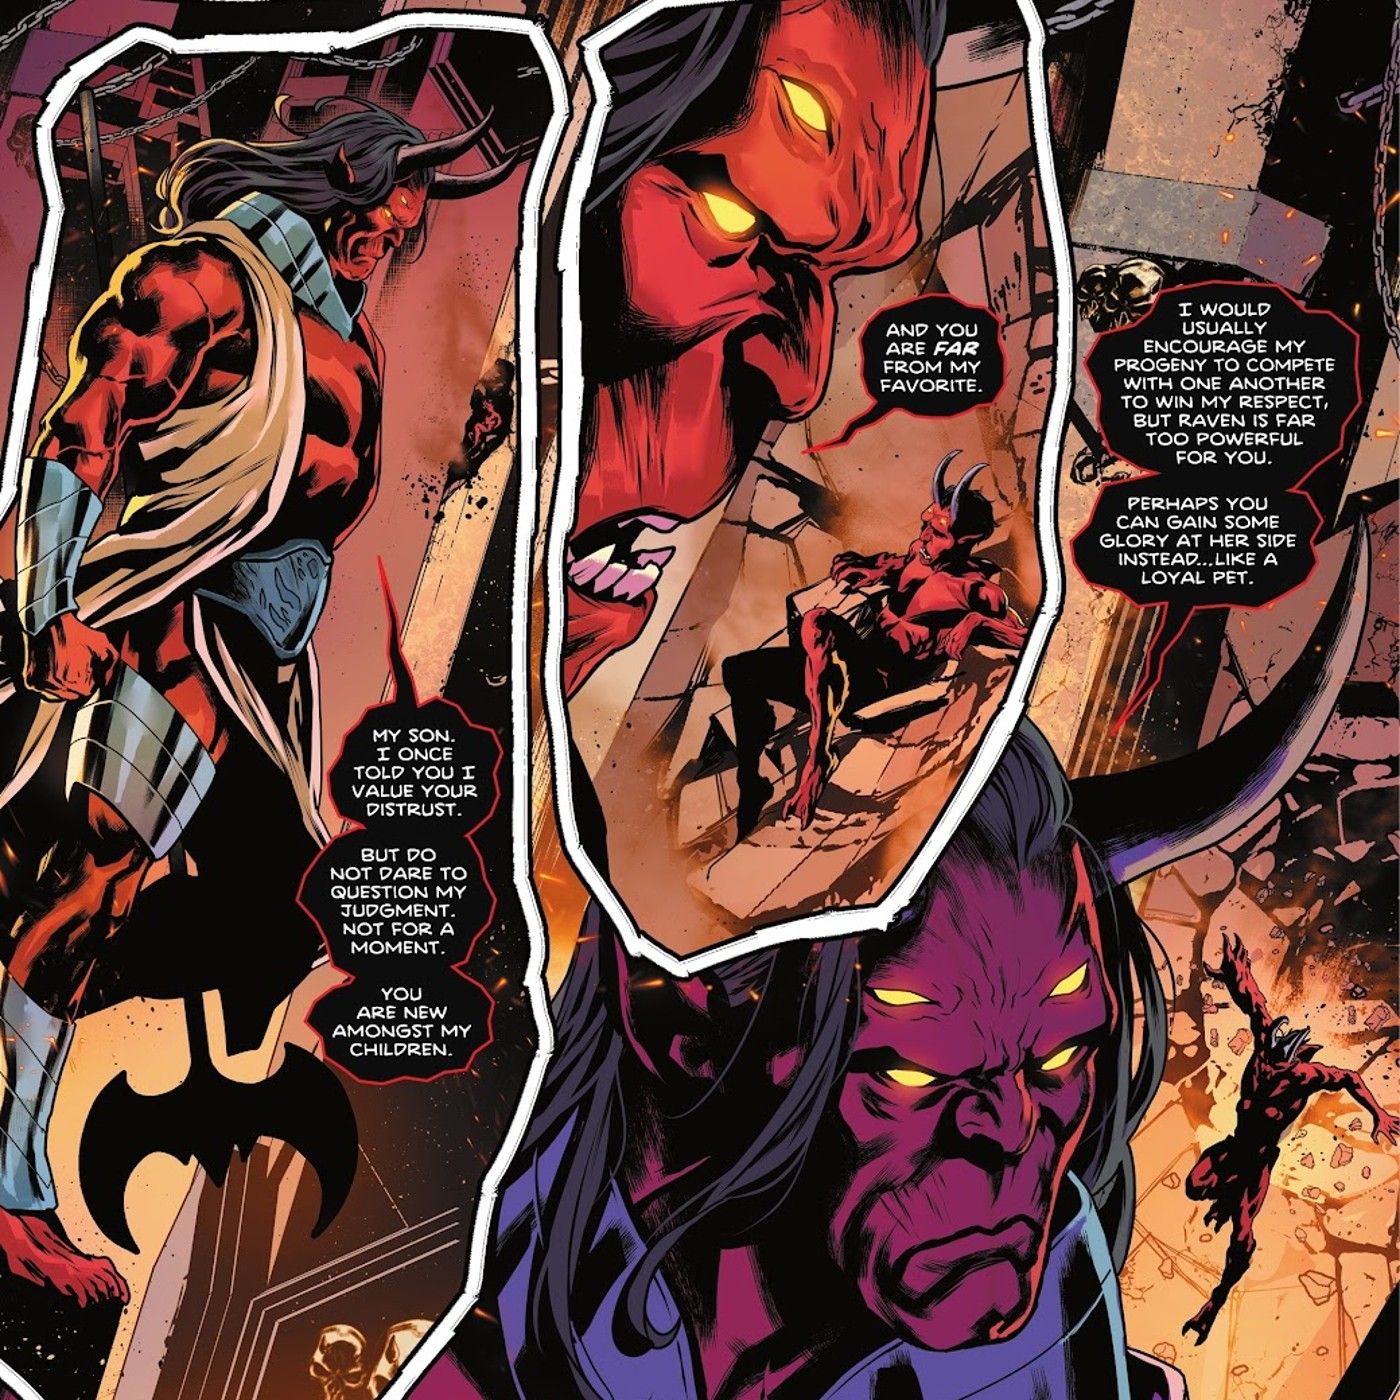 Comic book panels: the demon Trigon speaks to his son Trilogy